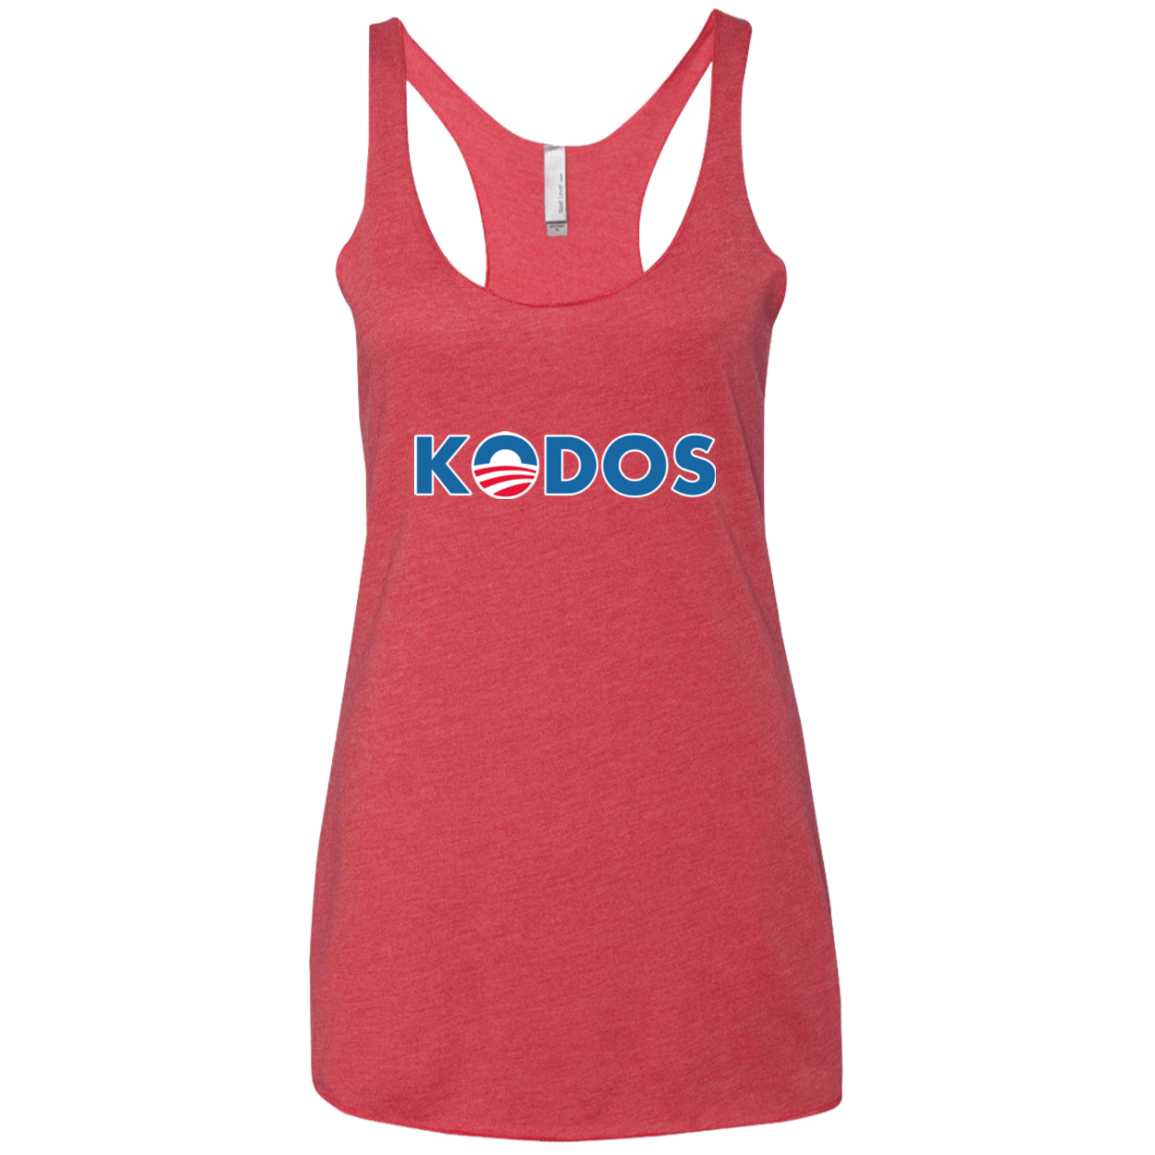 Vote for Kodos Women's Triblend Racerback Tank